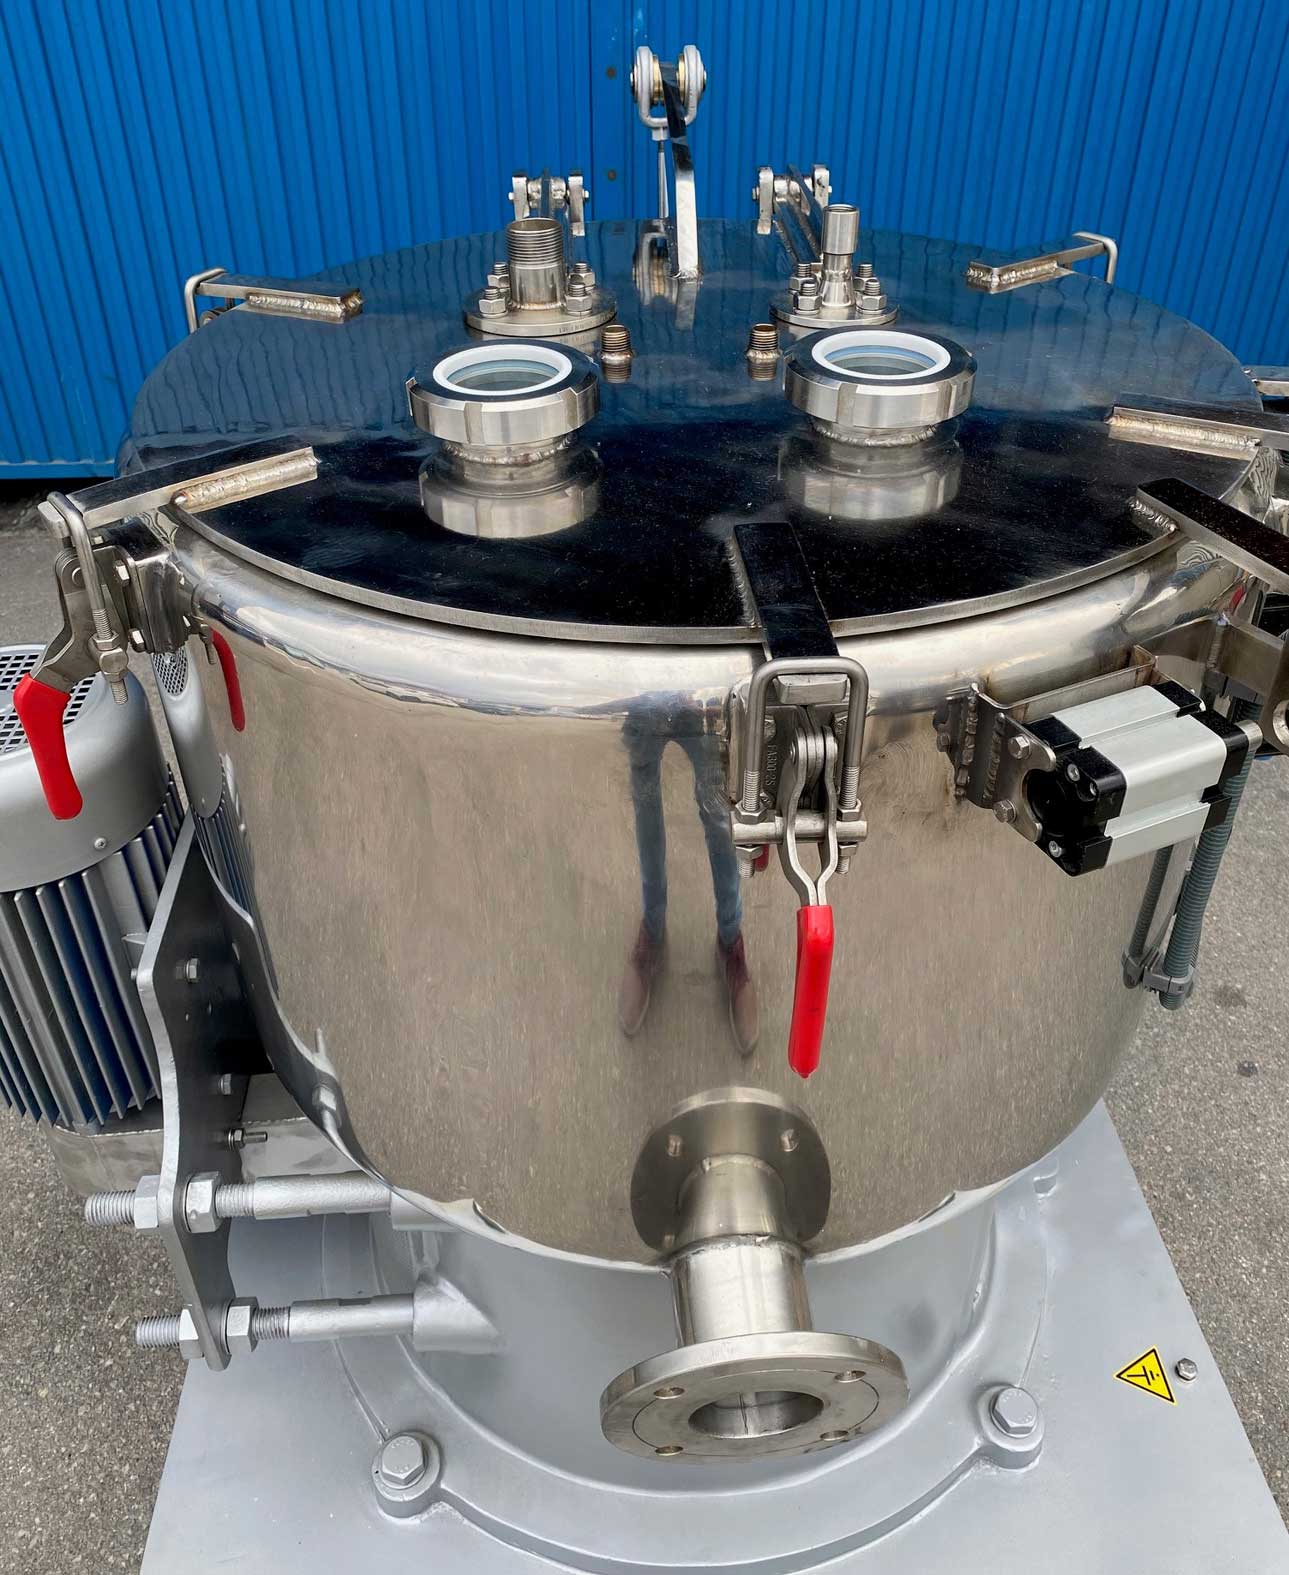 Fabricacion centrifugas RTA 60 2 - CENTRIFUGA PLANTA PILOTO RTA-60 EN ACERO INOXIDABLE 1.4404 (316L)